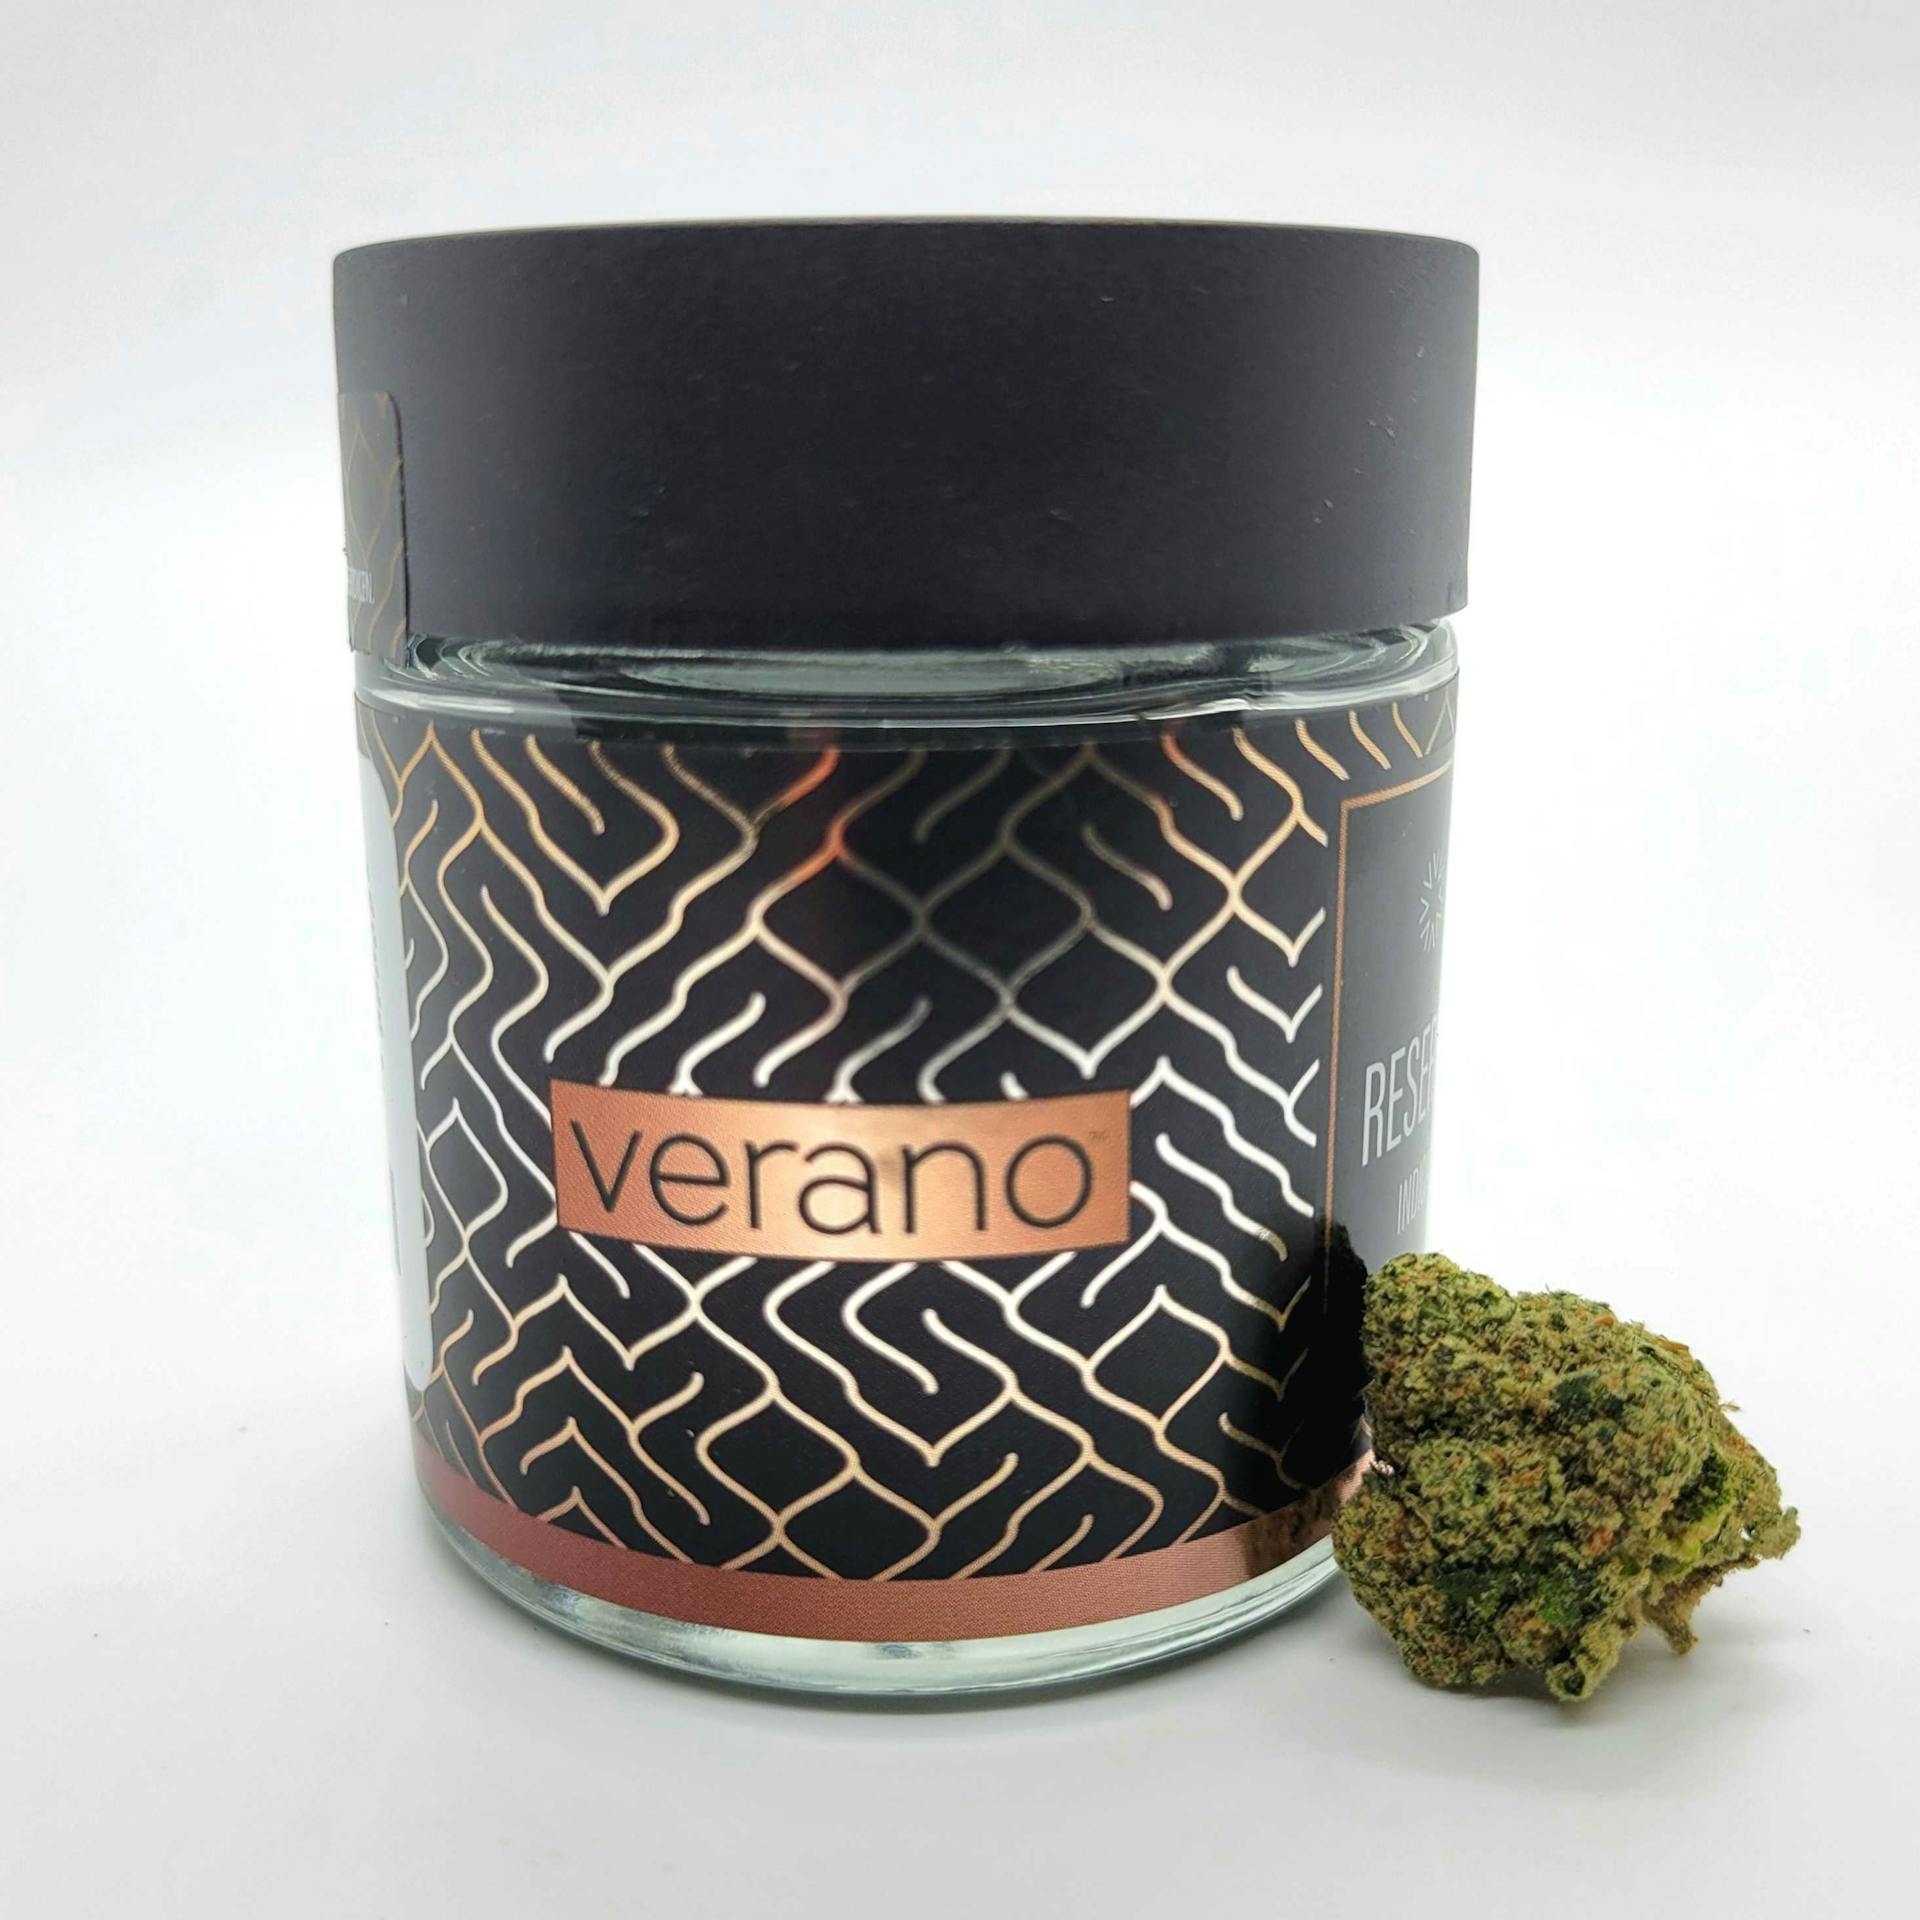 Slurricane by Verano Cannabis